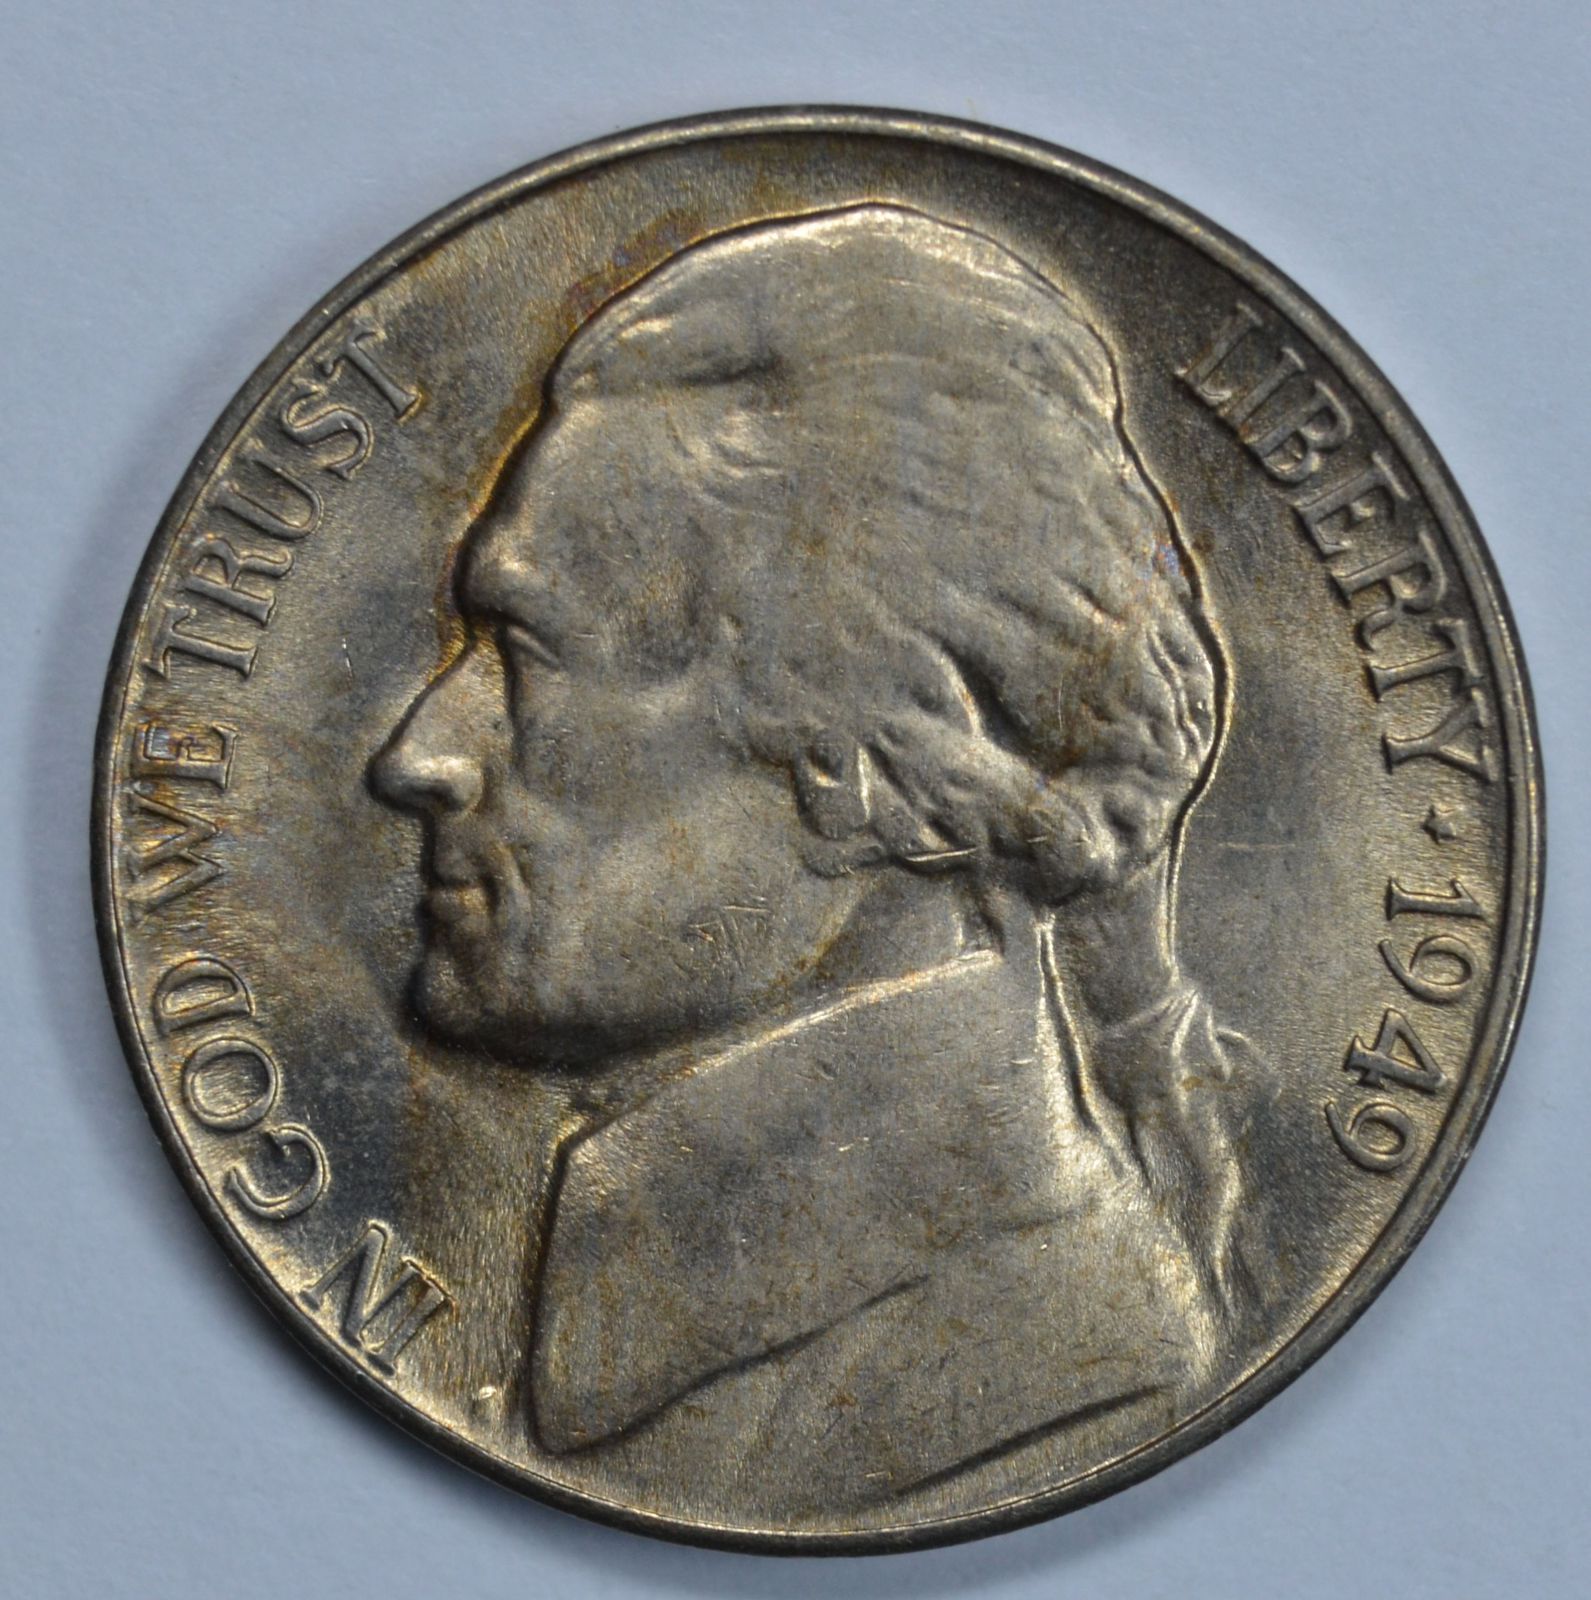 1949 D Jefferson uncirculated nickel BU - $11.00